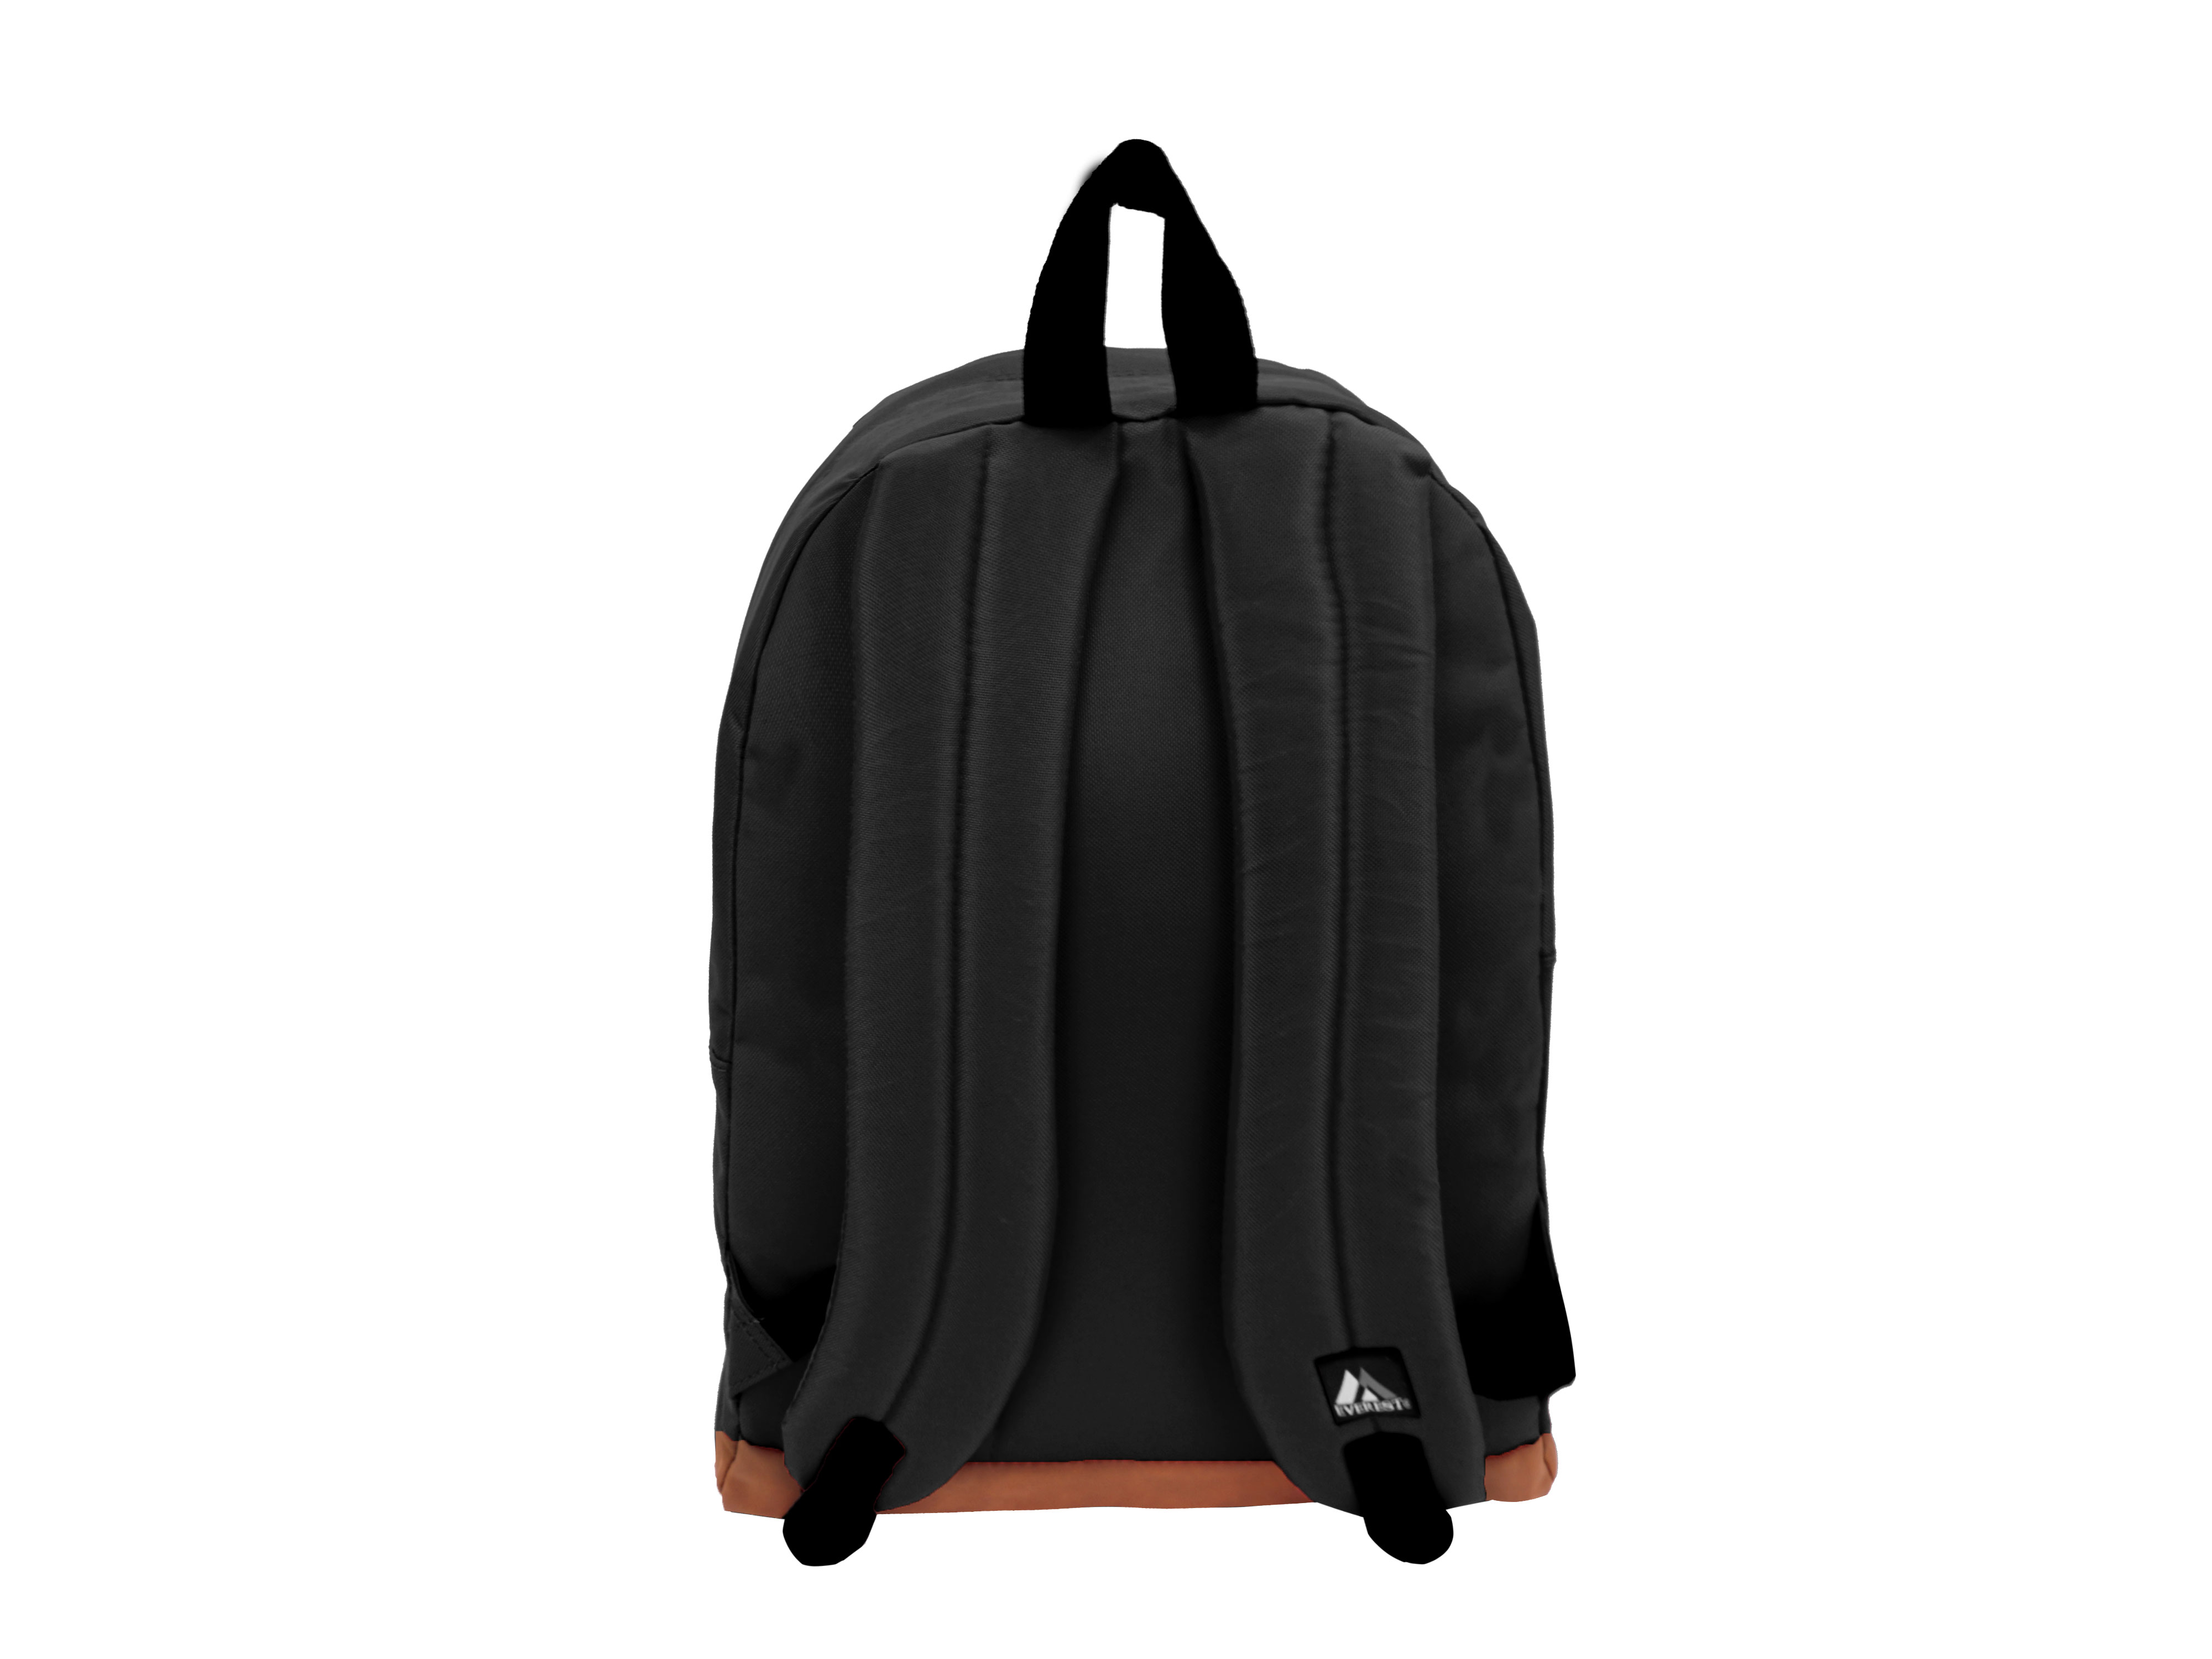 Everest 17" Suede Bottom Backpack, Black All Ages, Unisex 1045GL-BK, Carrier and Shoulder Book Bag for School, Work, Sports, and Travel - image 3 of 4